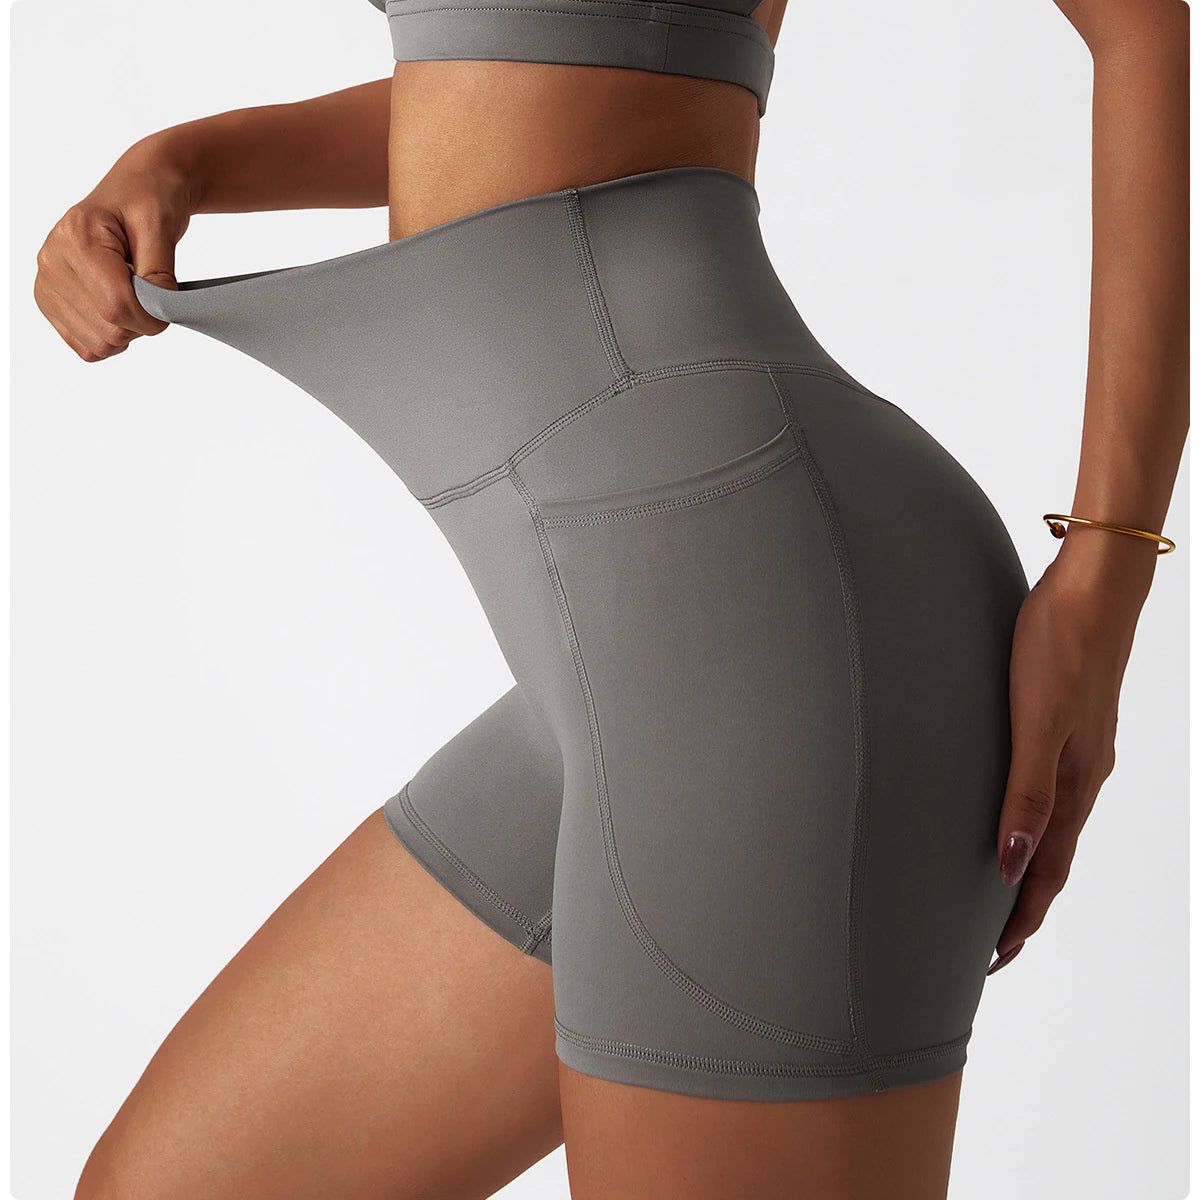 silver grey womens shorts with pocket nylon spandex